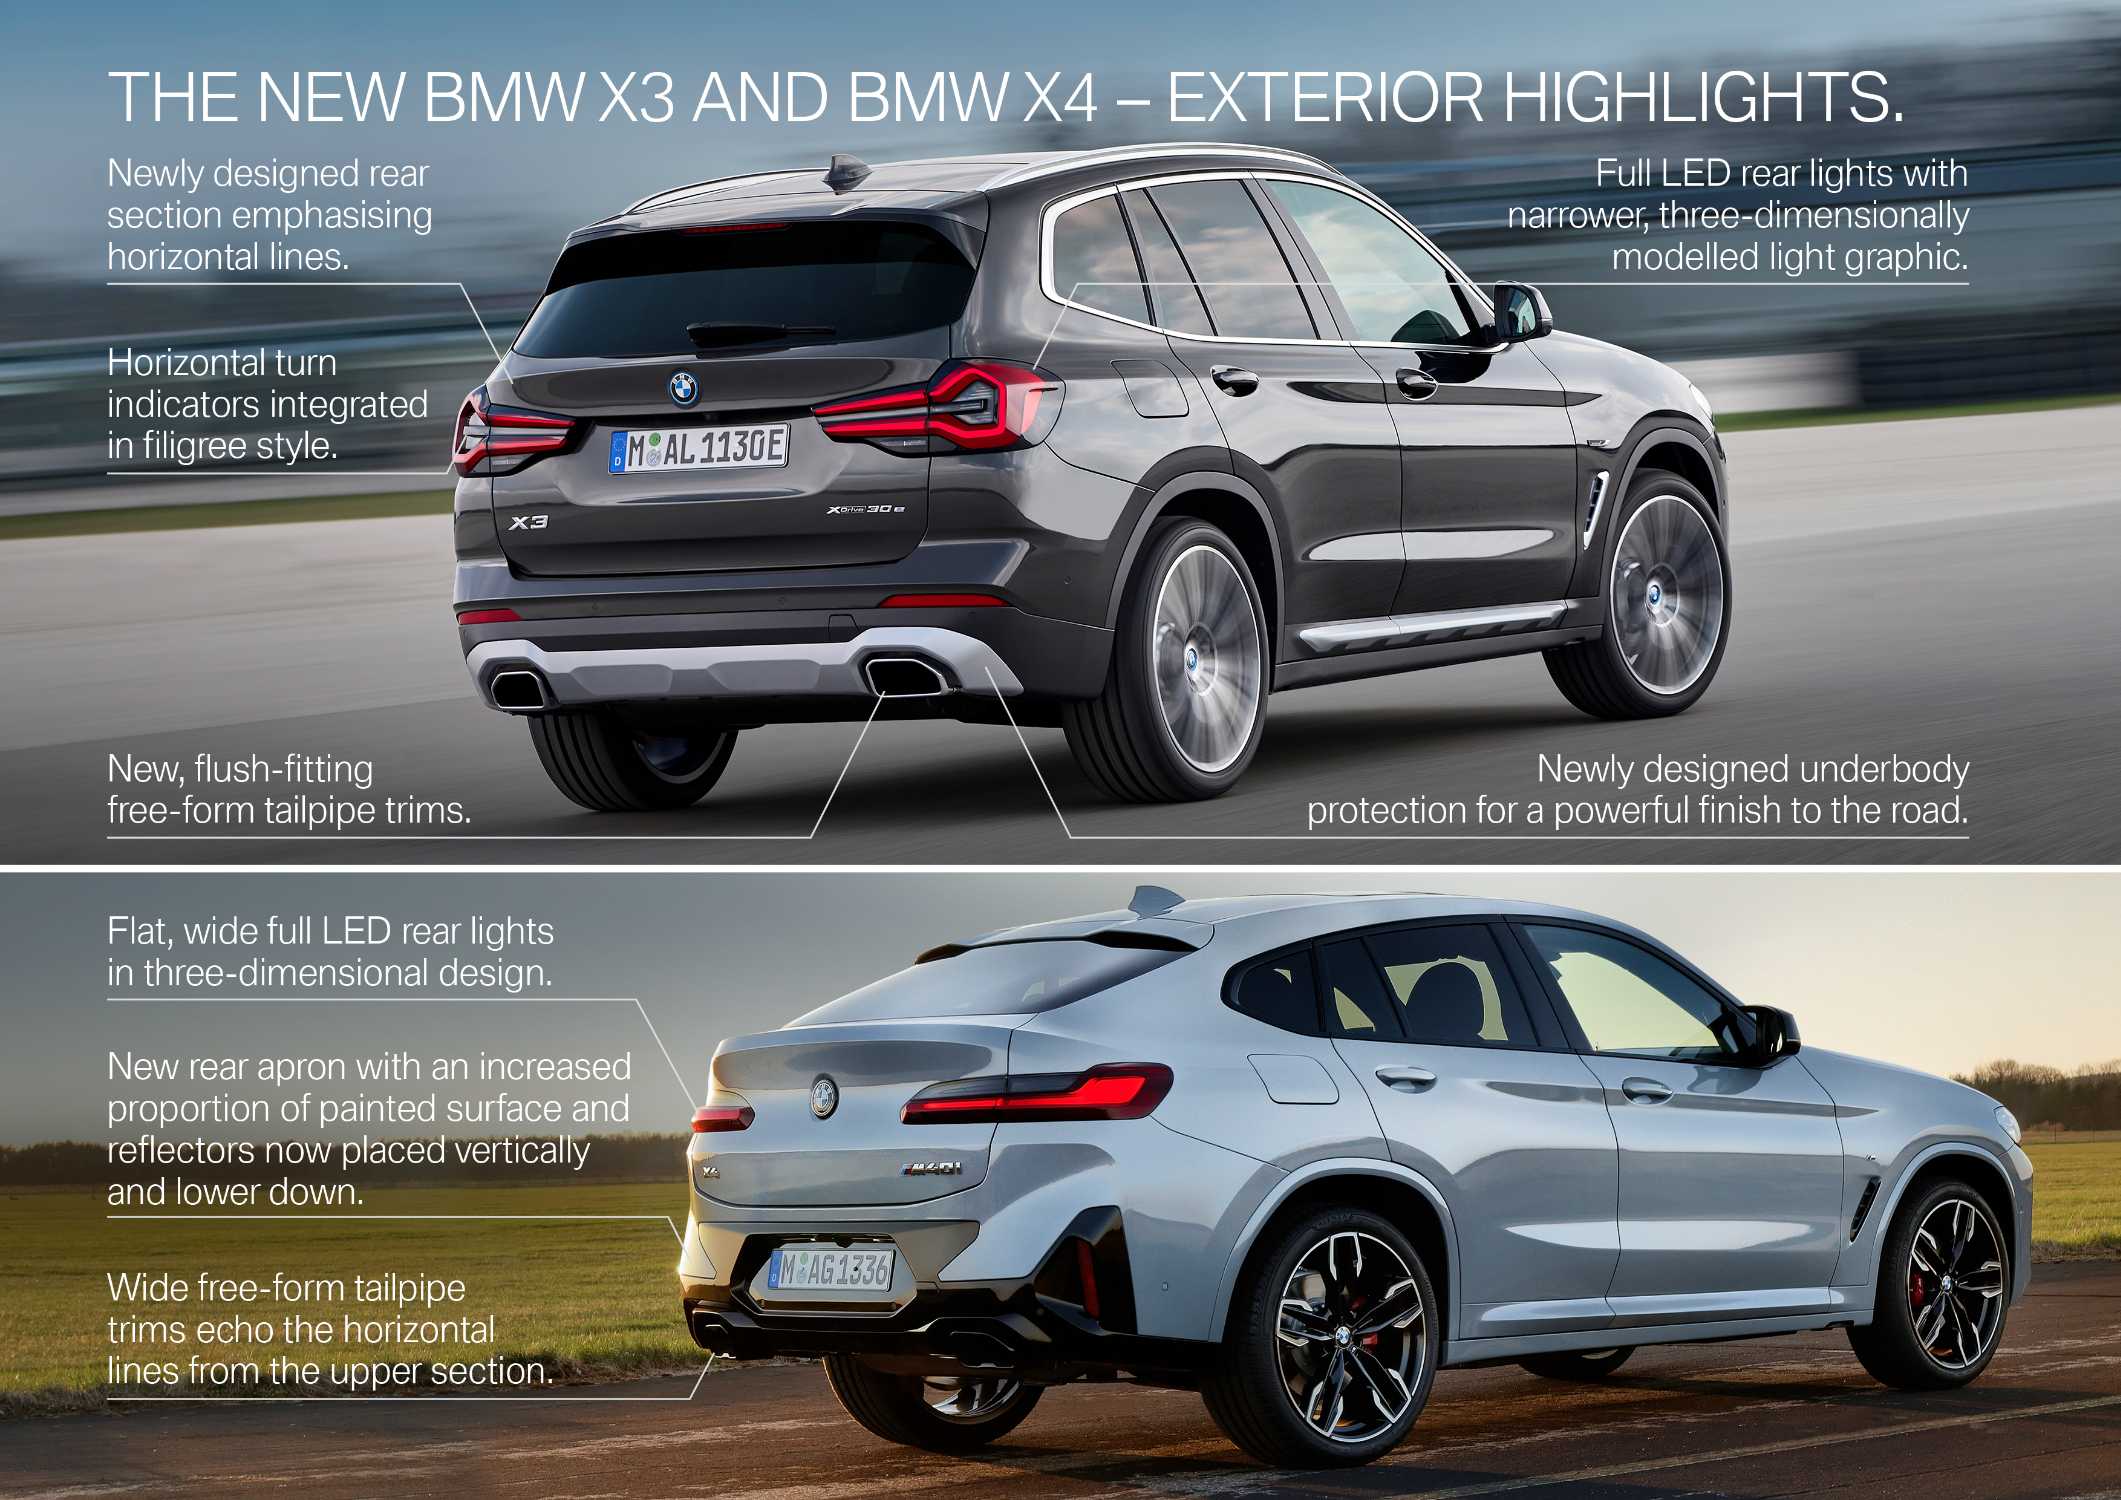 The new BMW X3 xDrive30e, Sophisto Grey metallic, Rim 21” Styling 726 and the new BMW X4 M40i, Brooklyn Grey metallic, Rim 21“ Styling 718M (06/2021).